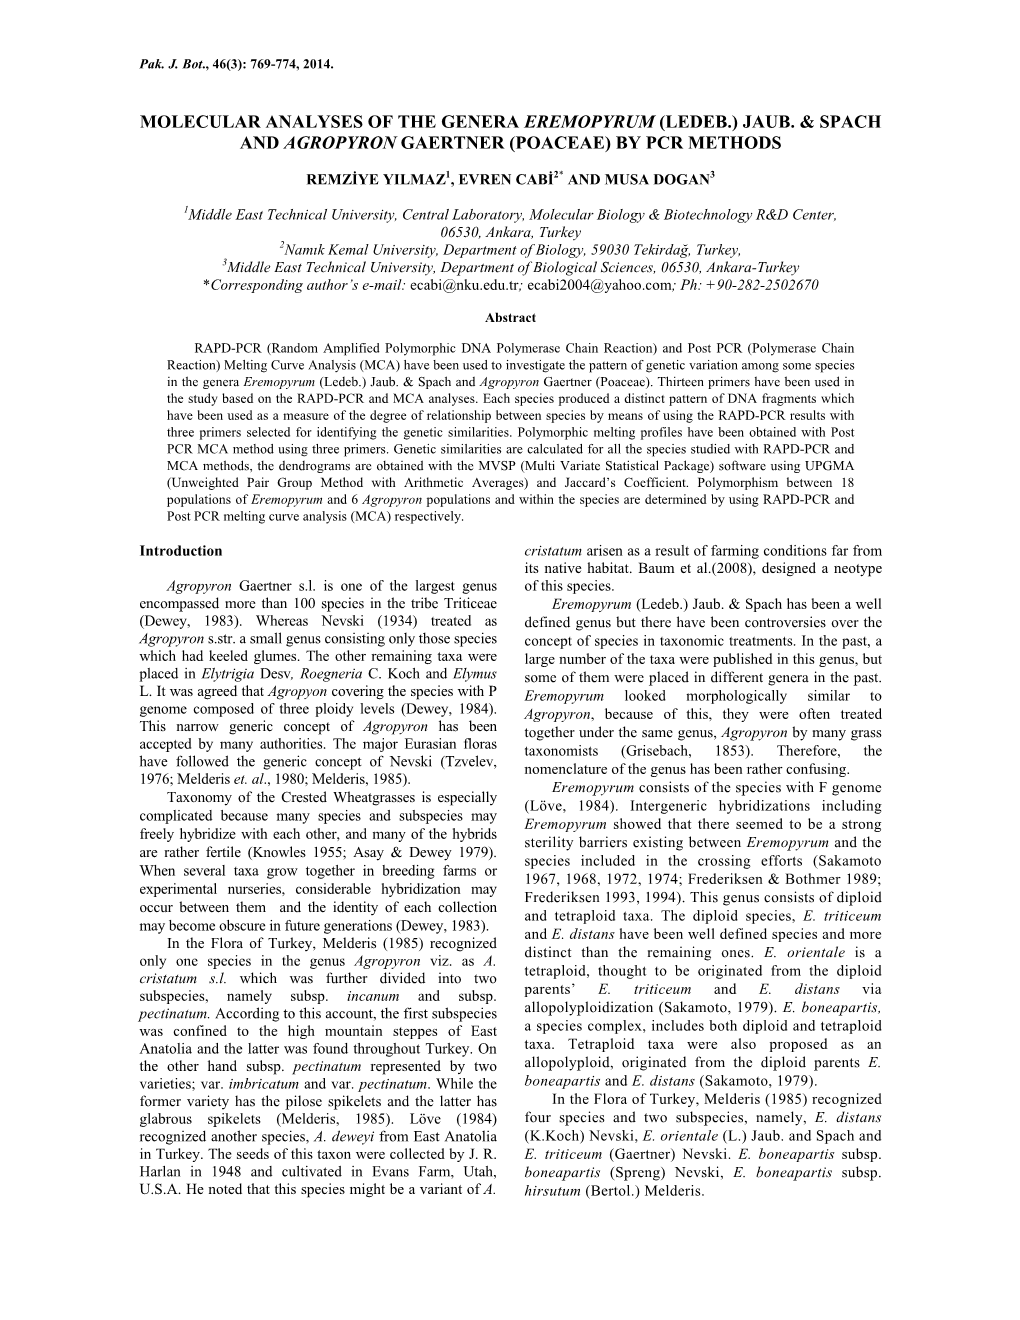 Molecular Analyses of the Genera Eremopyrum (Ledeb.) Jaub